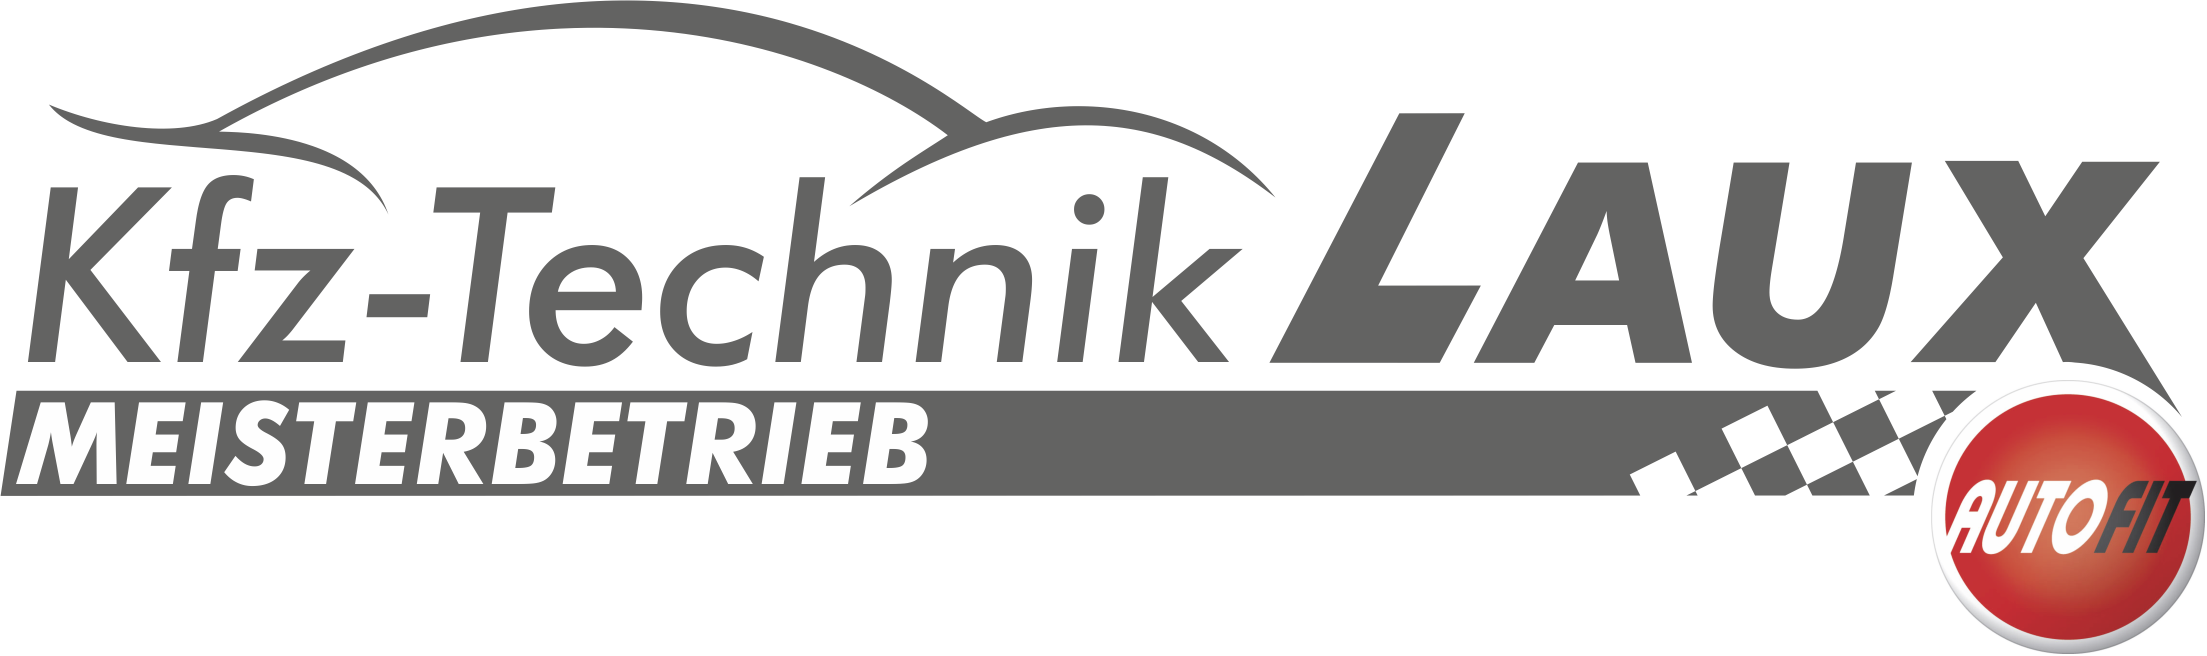 Kfz-Technik Laux logo